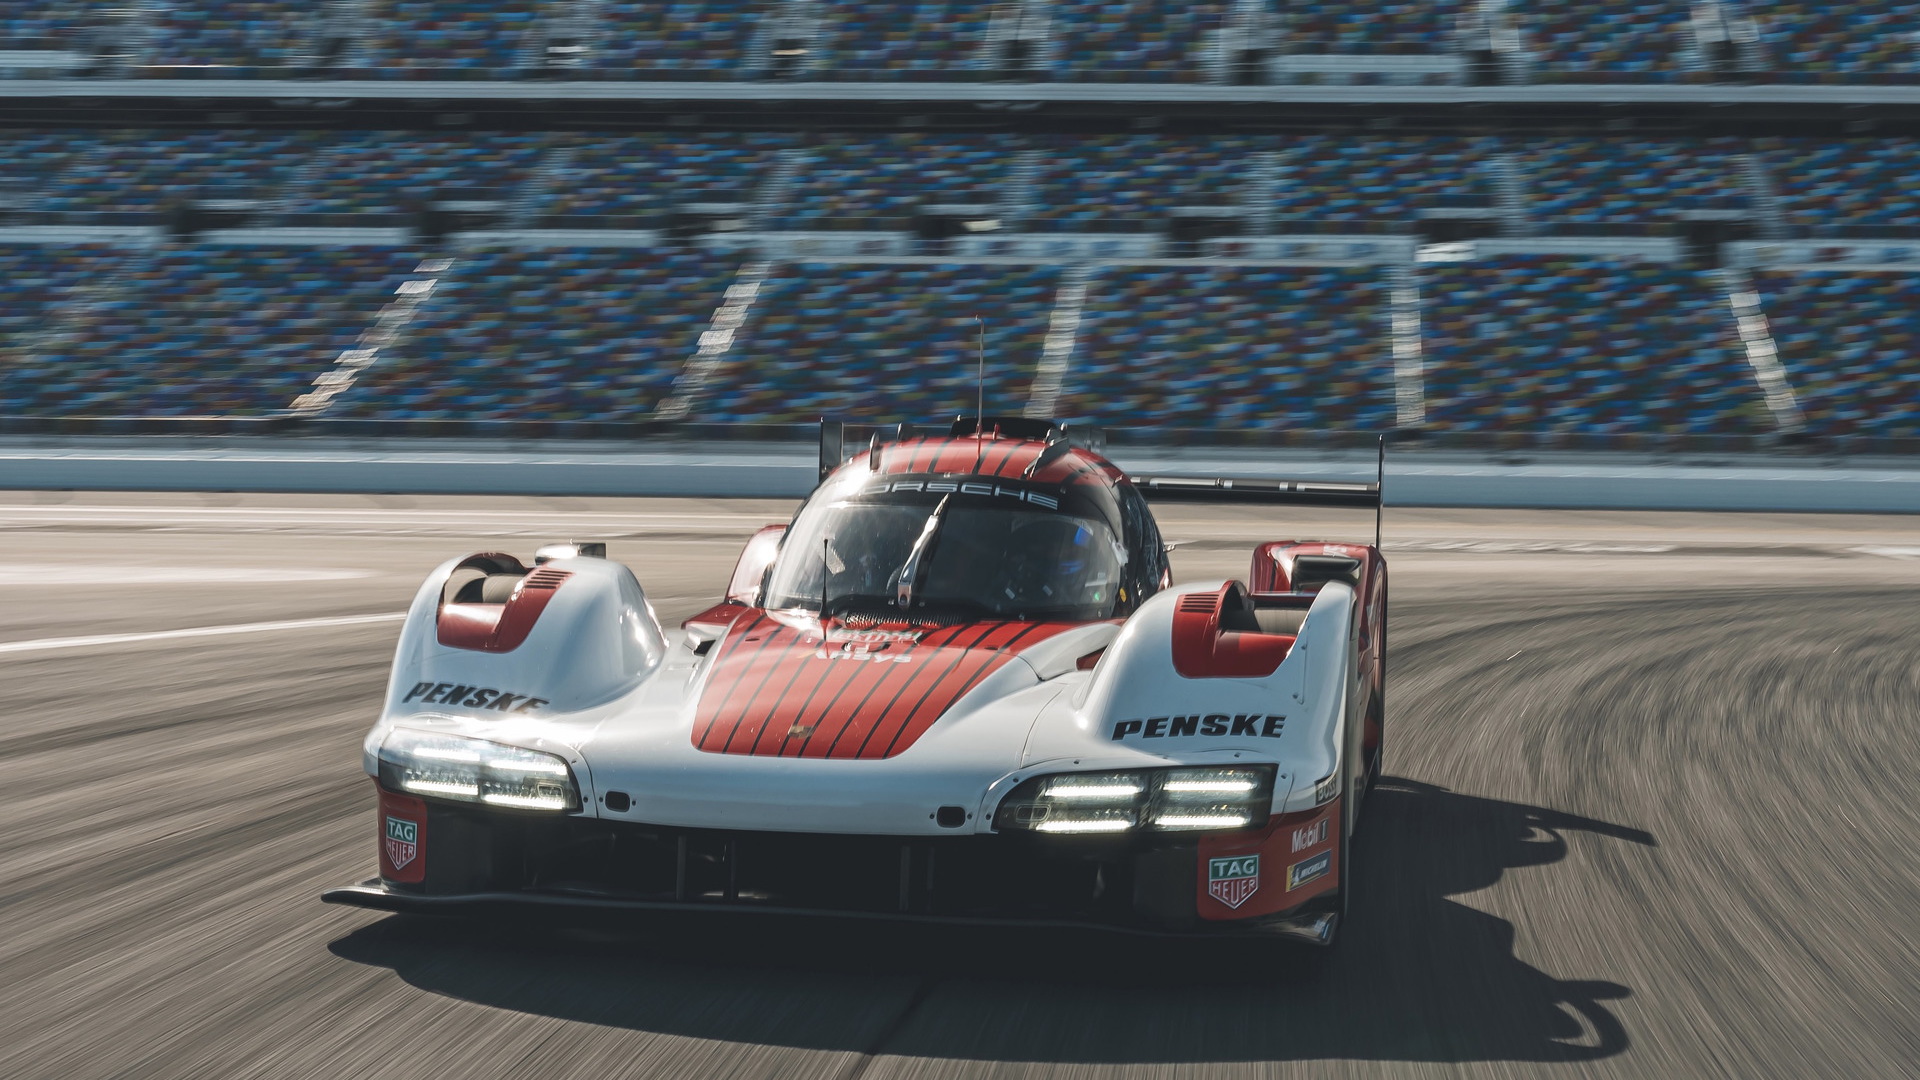 2023 Porsche 963 LMDh race car tests at Daytona International Speedway